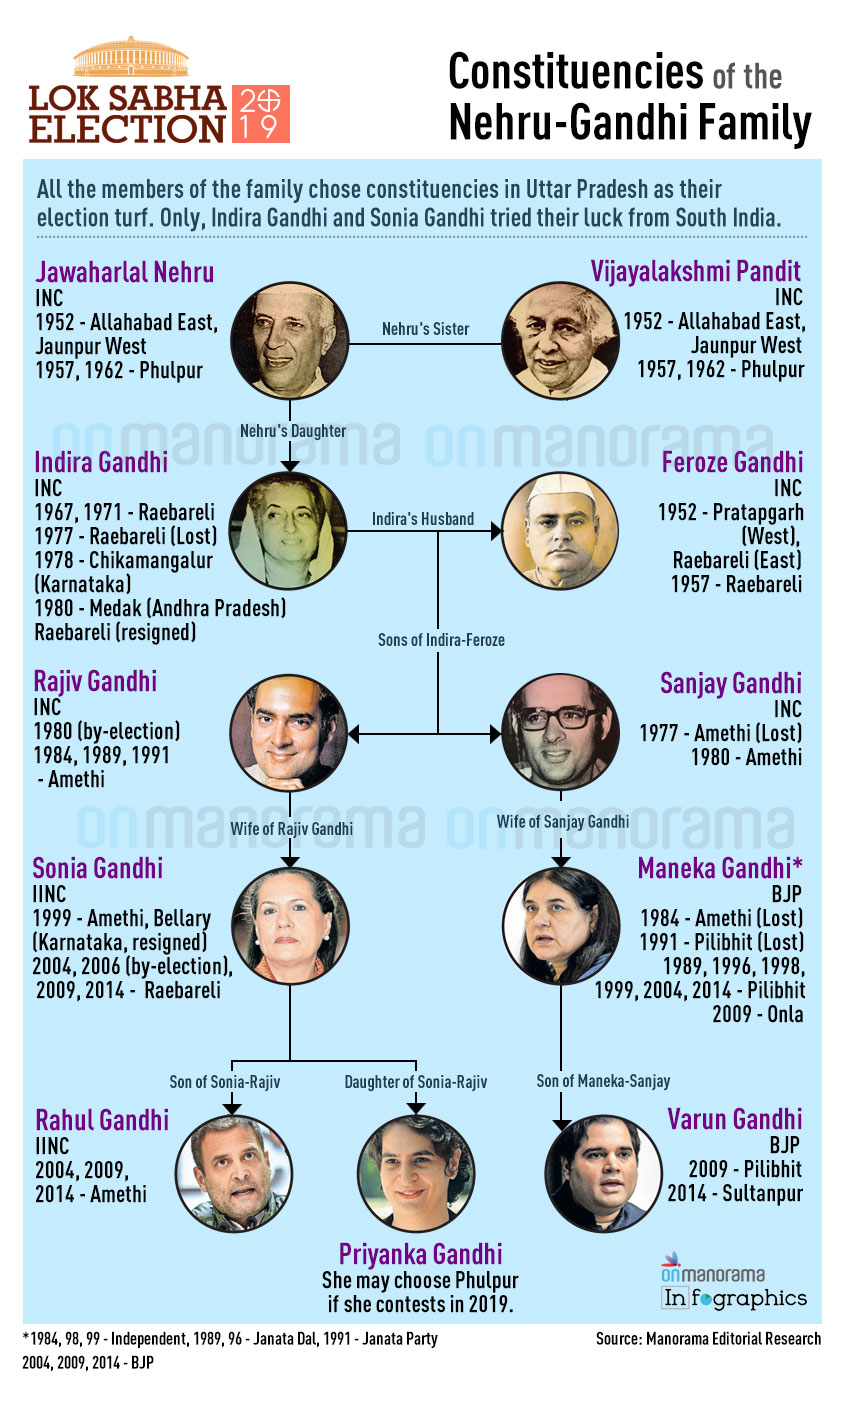 Nehru-Gandhi Family in Elections